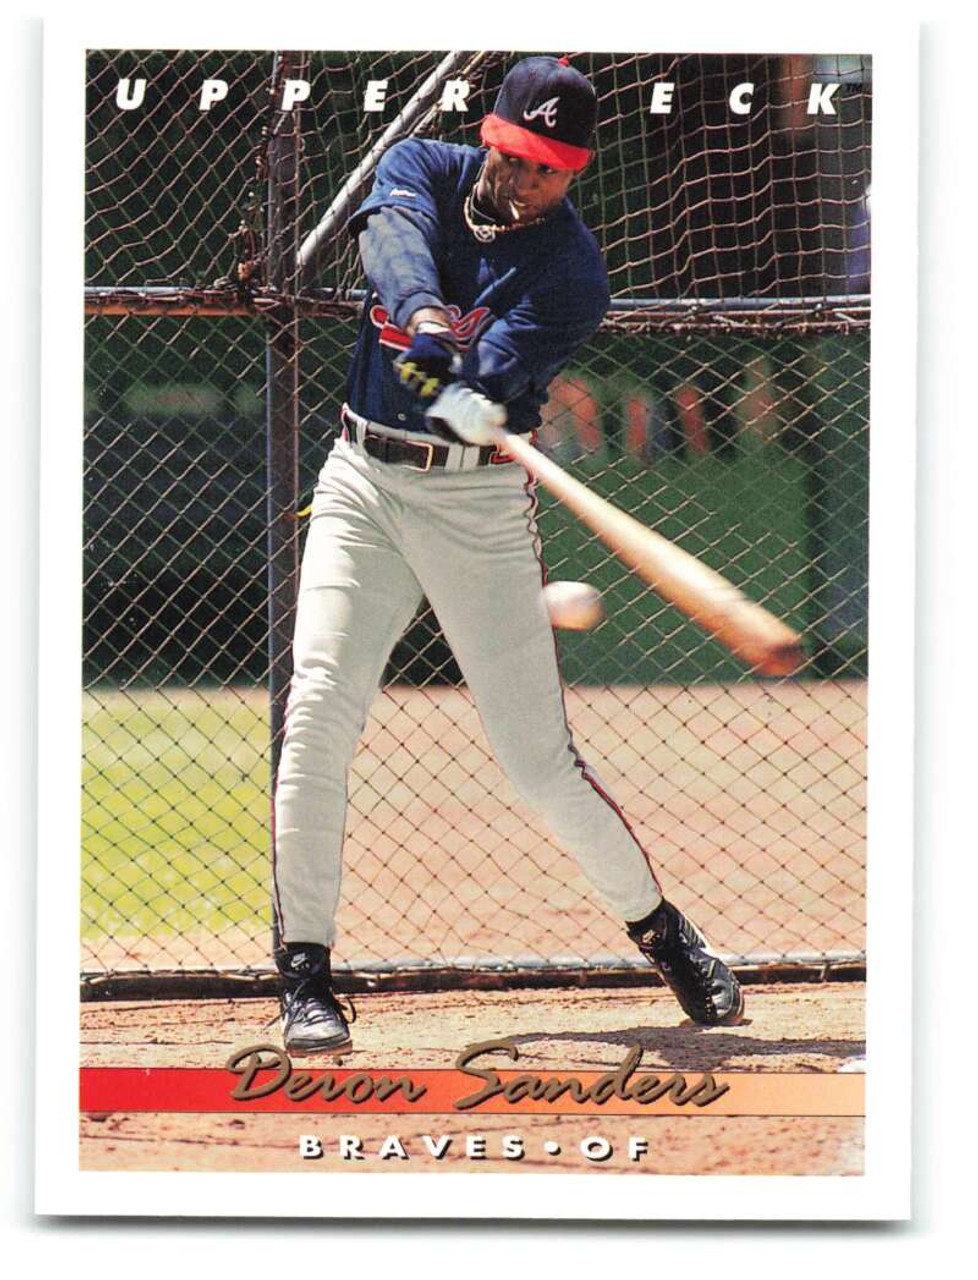 1992 Upper Deck Baseball Card #247 Deion Sanders